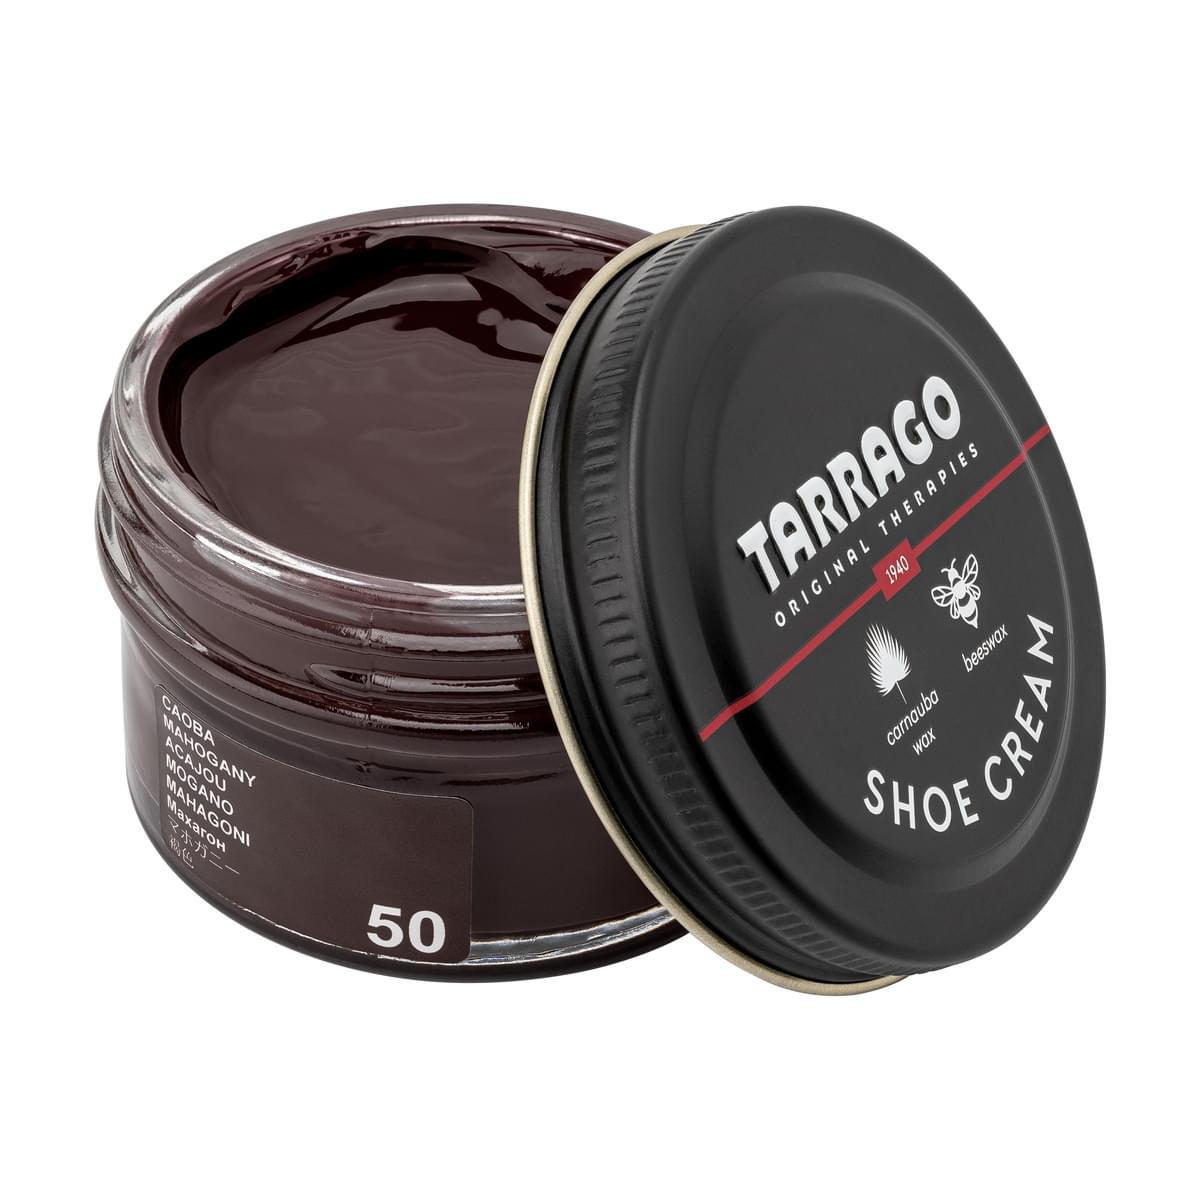 Tarrago Shoe Cream  - Mahogany - 50